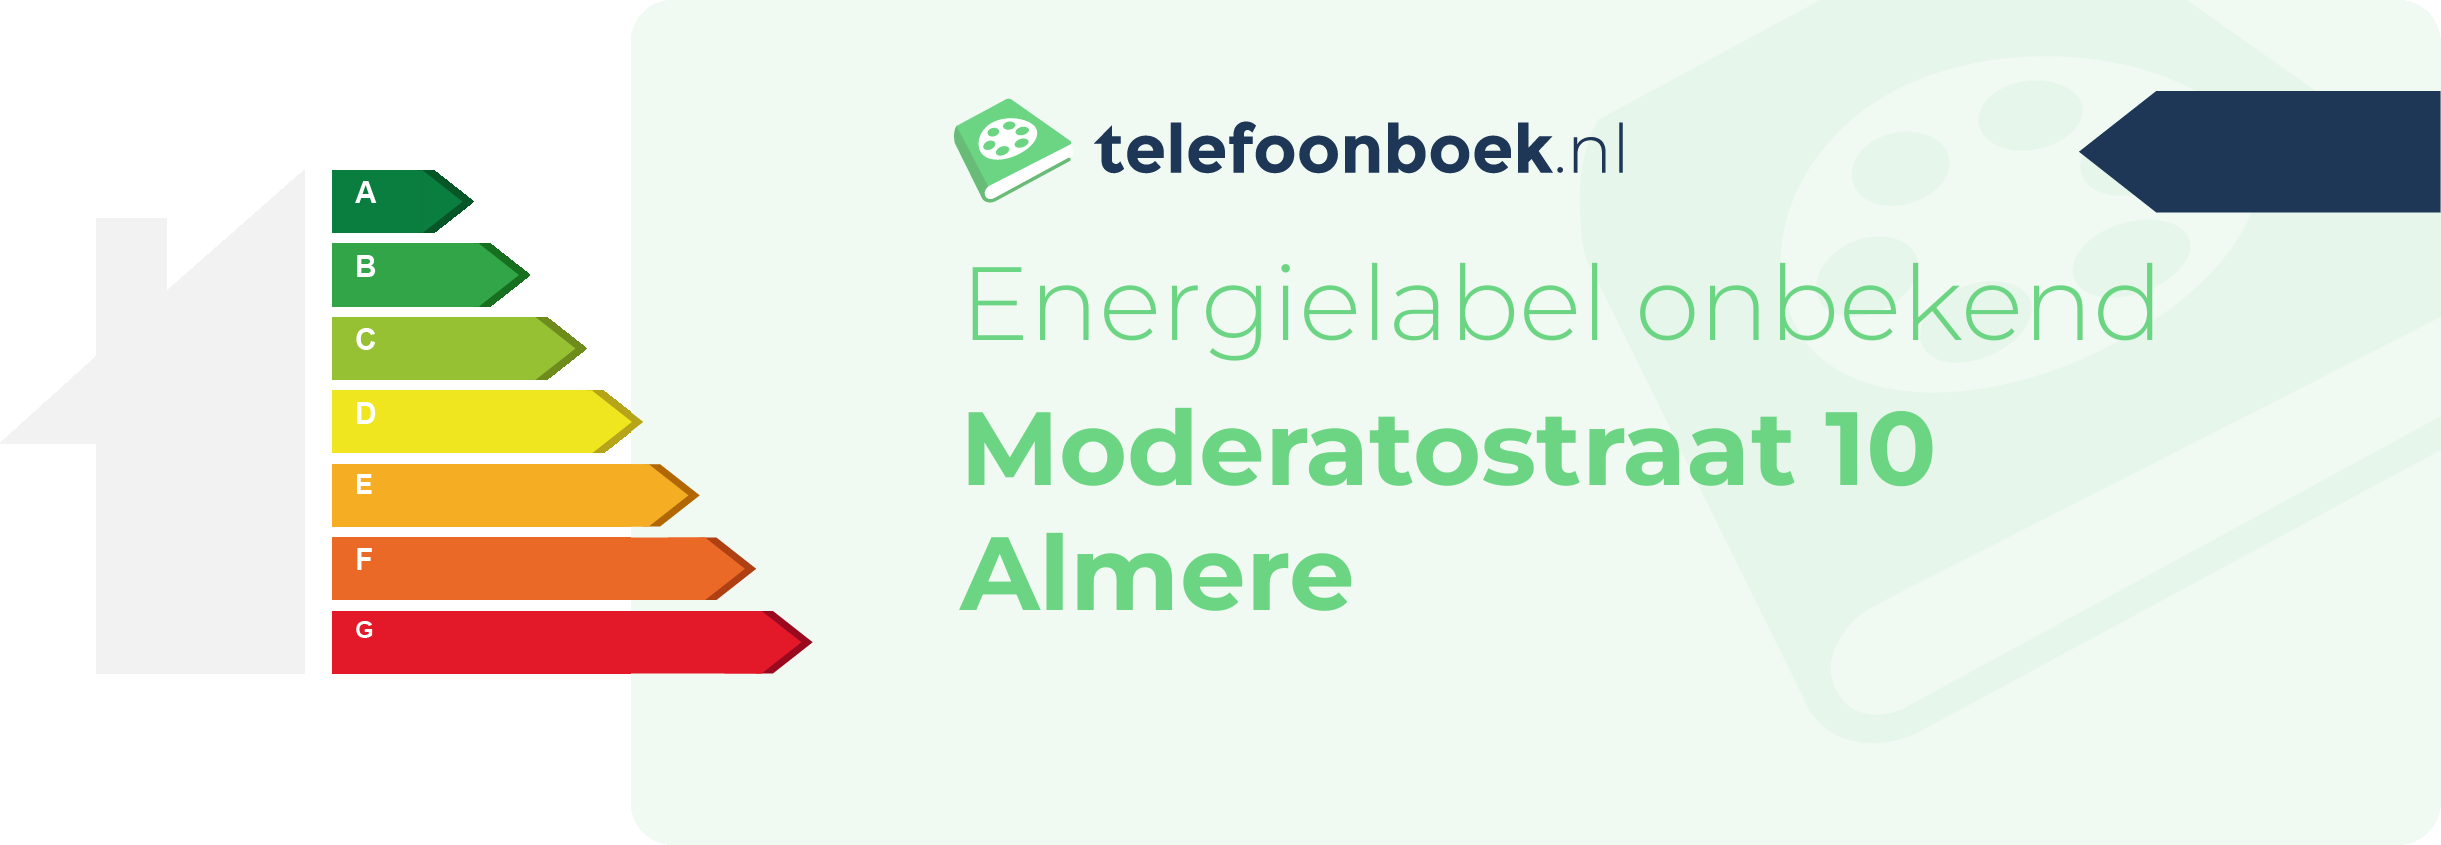 Energielabel Moderatostraat 10 Almere